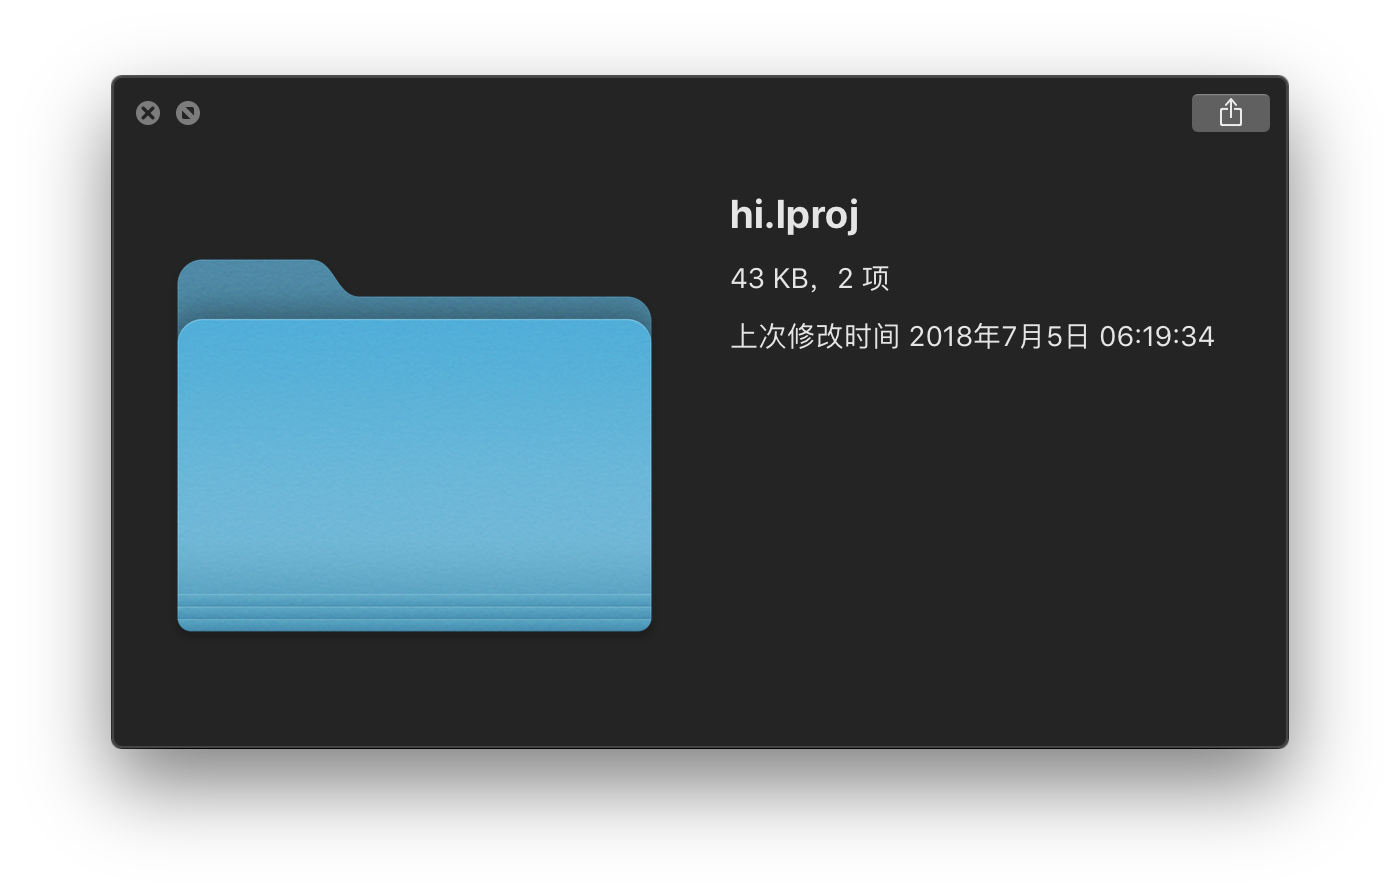 lock mac folder icon png